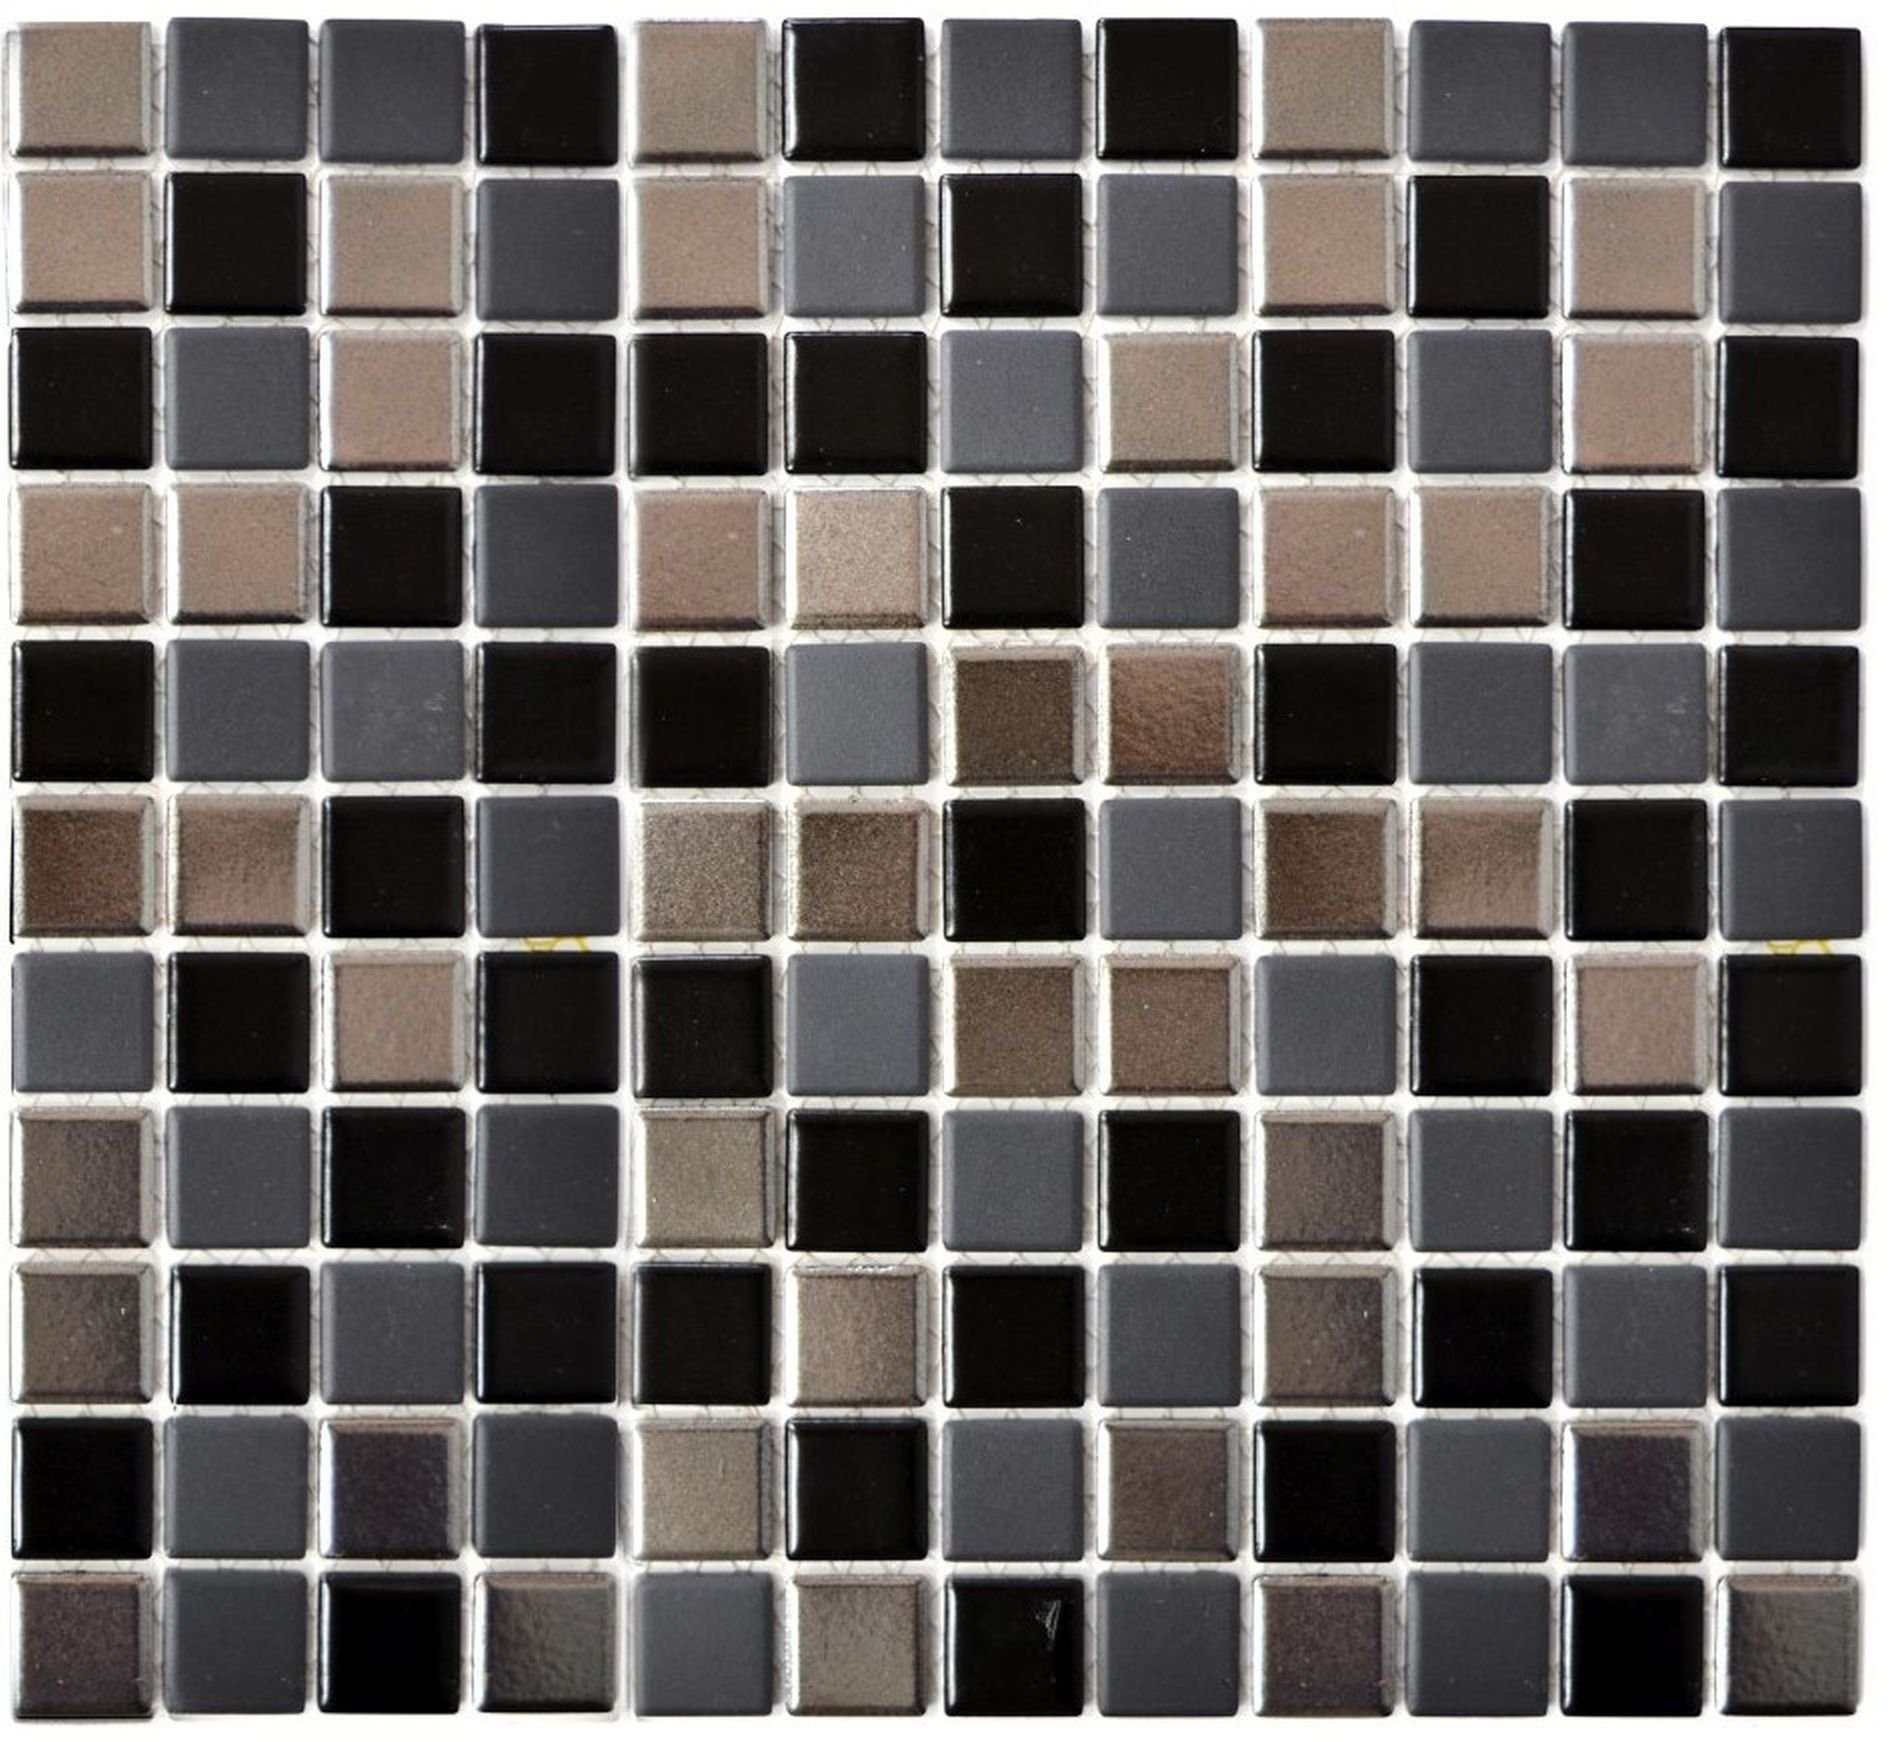 schwarz silber Küche Keramik Mosaik Mosaikfliesen Mosani anthrazit chrome